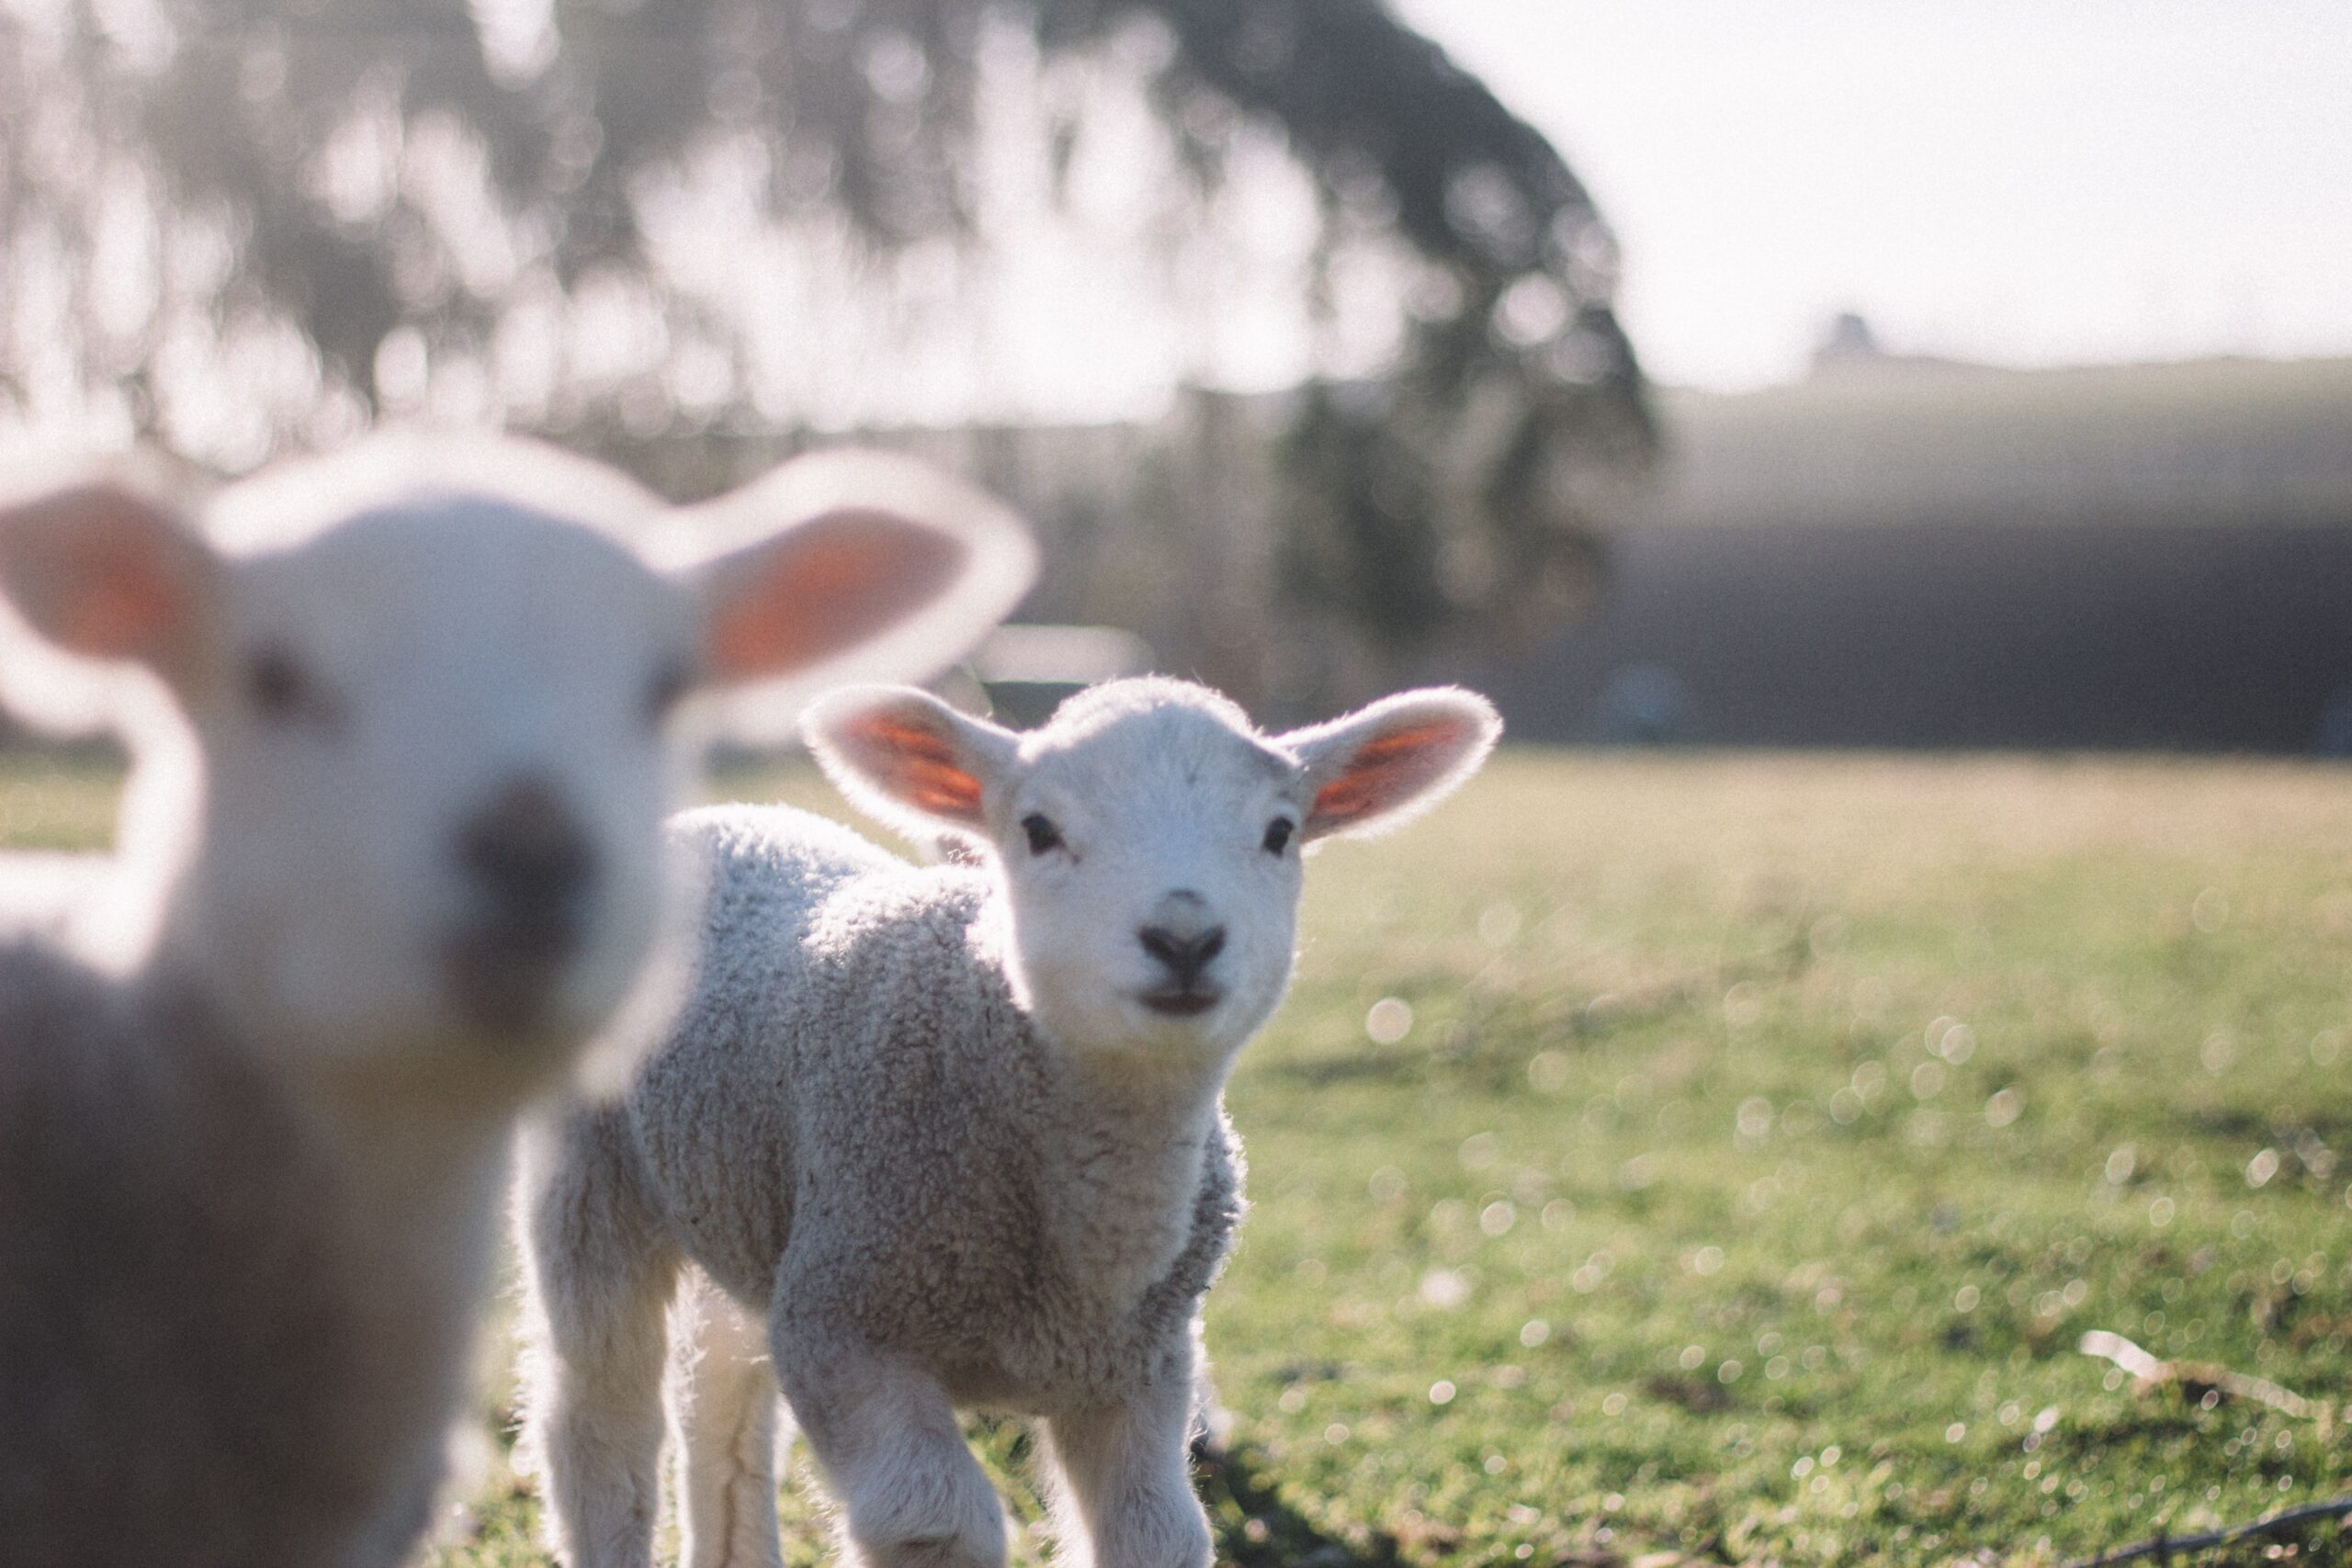 two lambs in a field